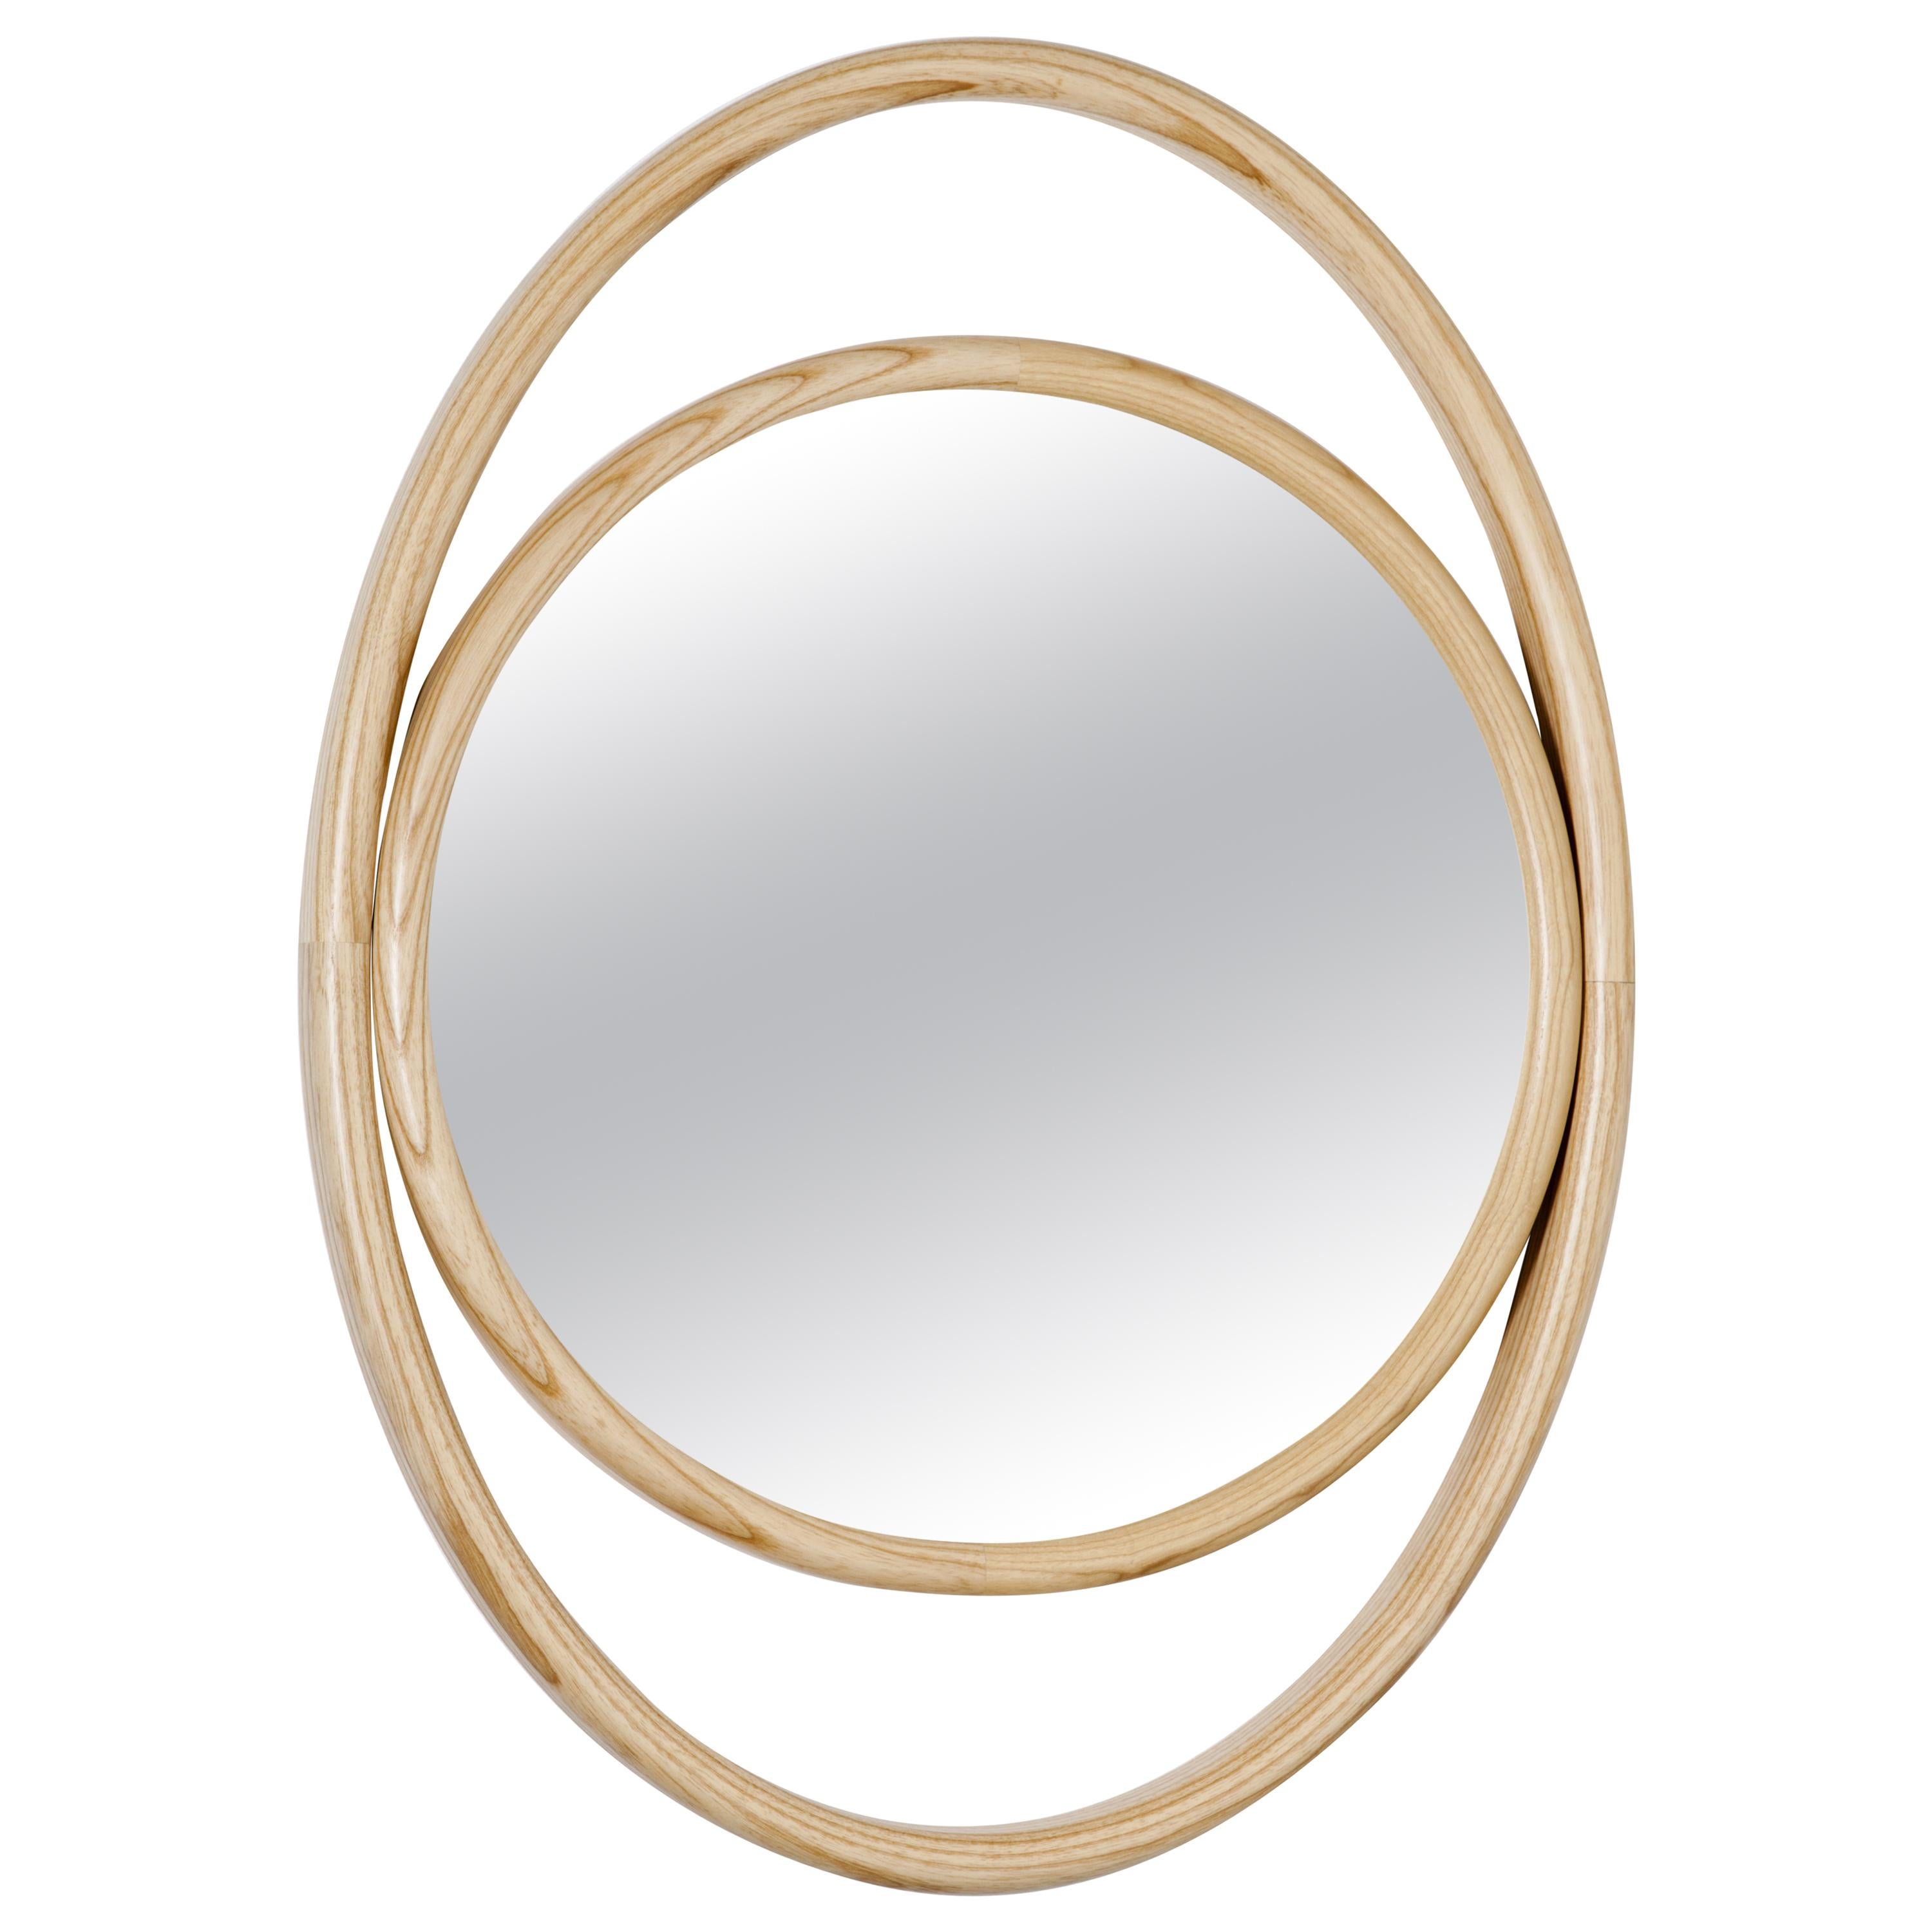 Gebrüder Thonet Vienna GmbH Eyeshine Large Oval Mirror with Ash Wood Frame For Sale